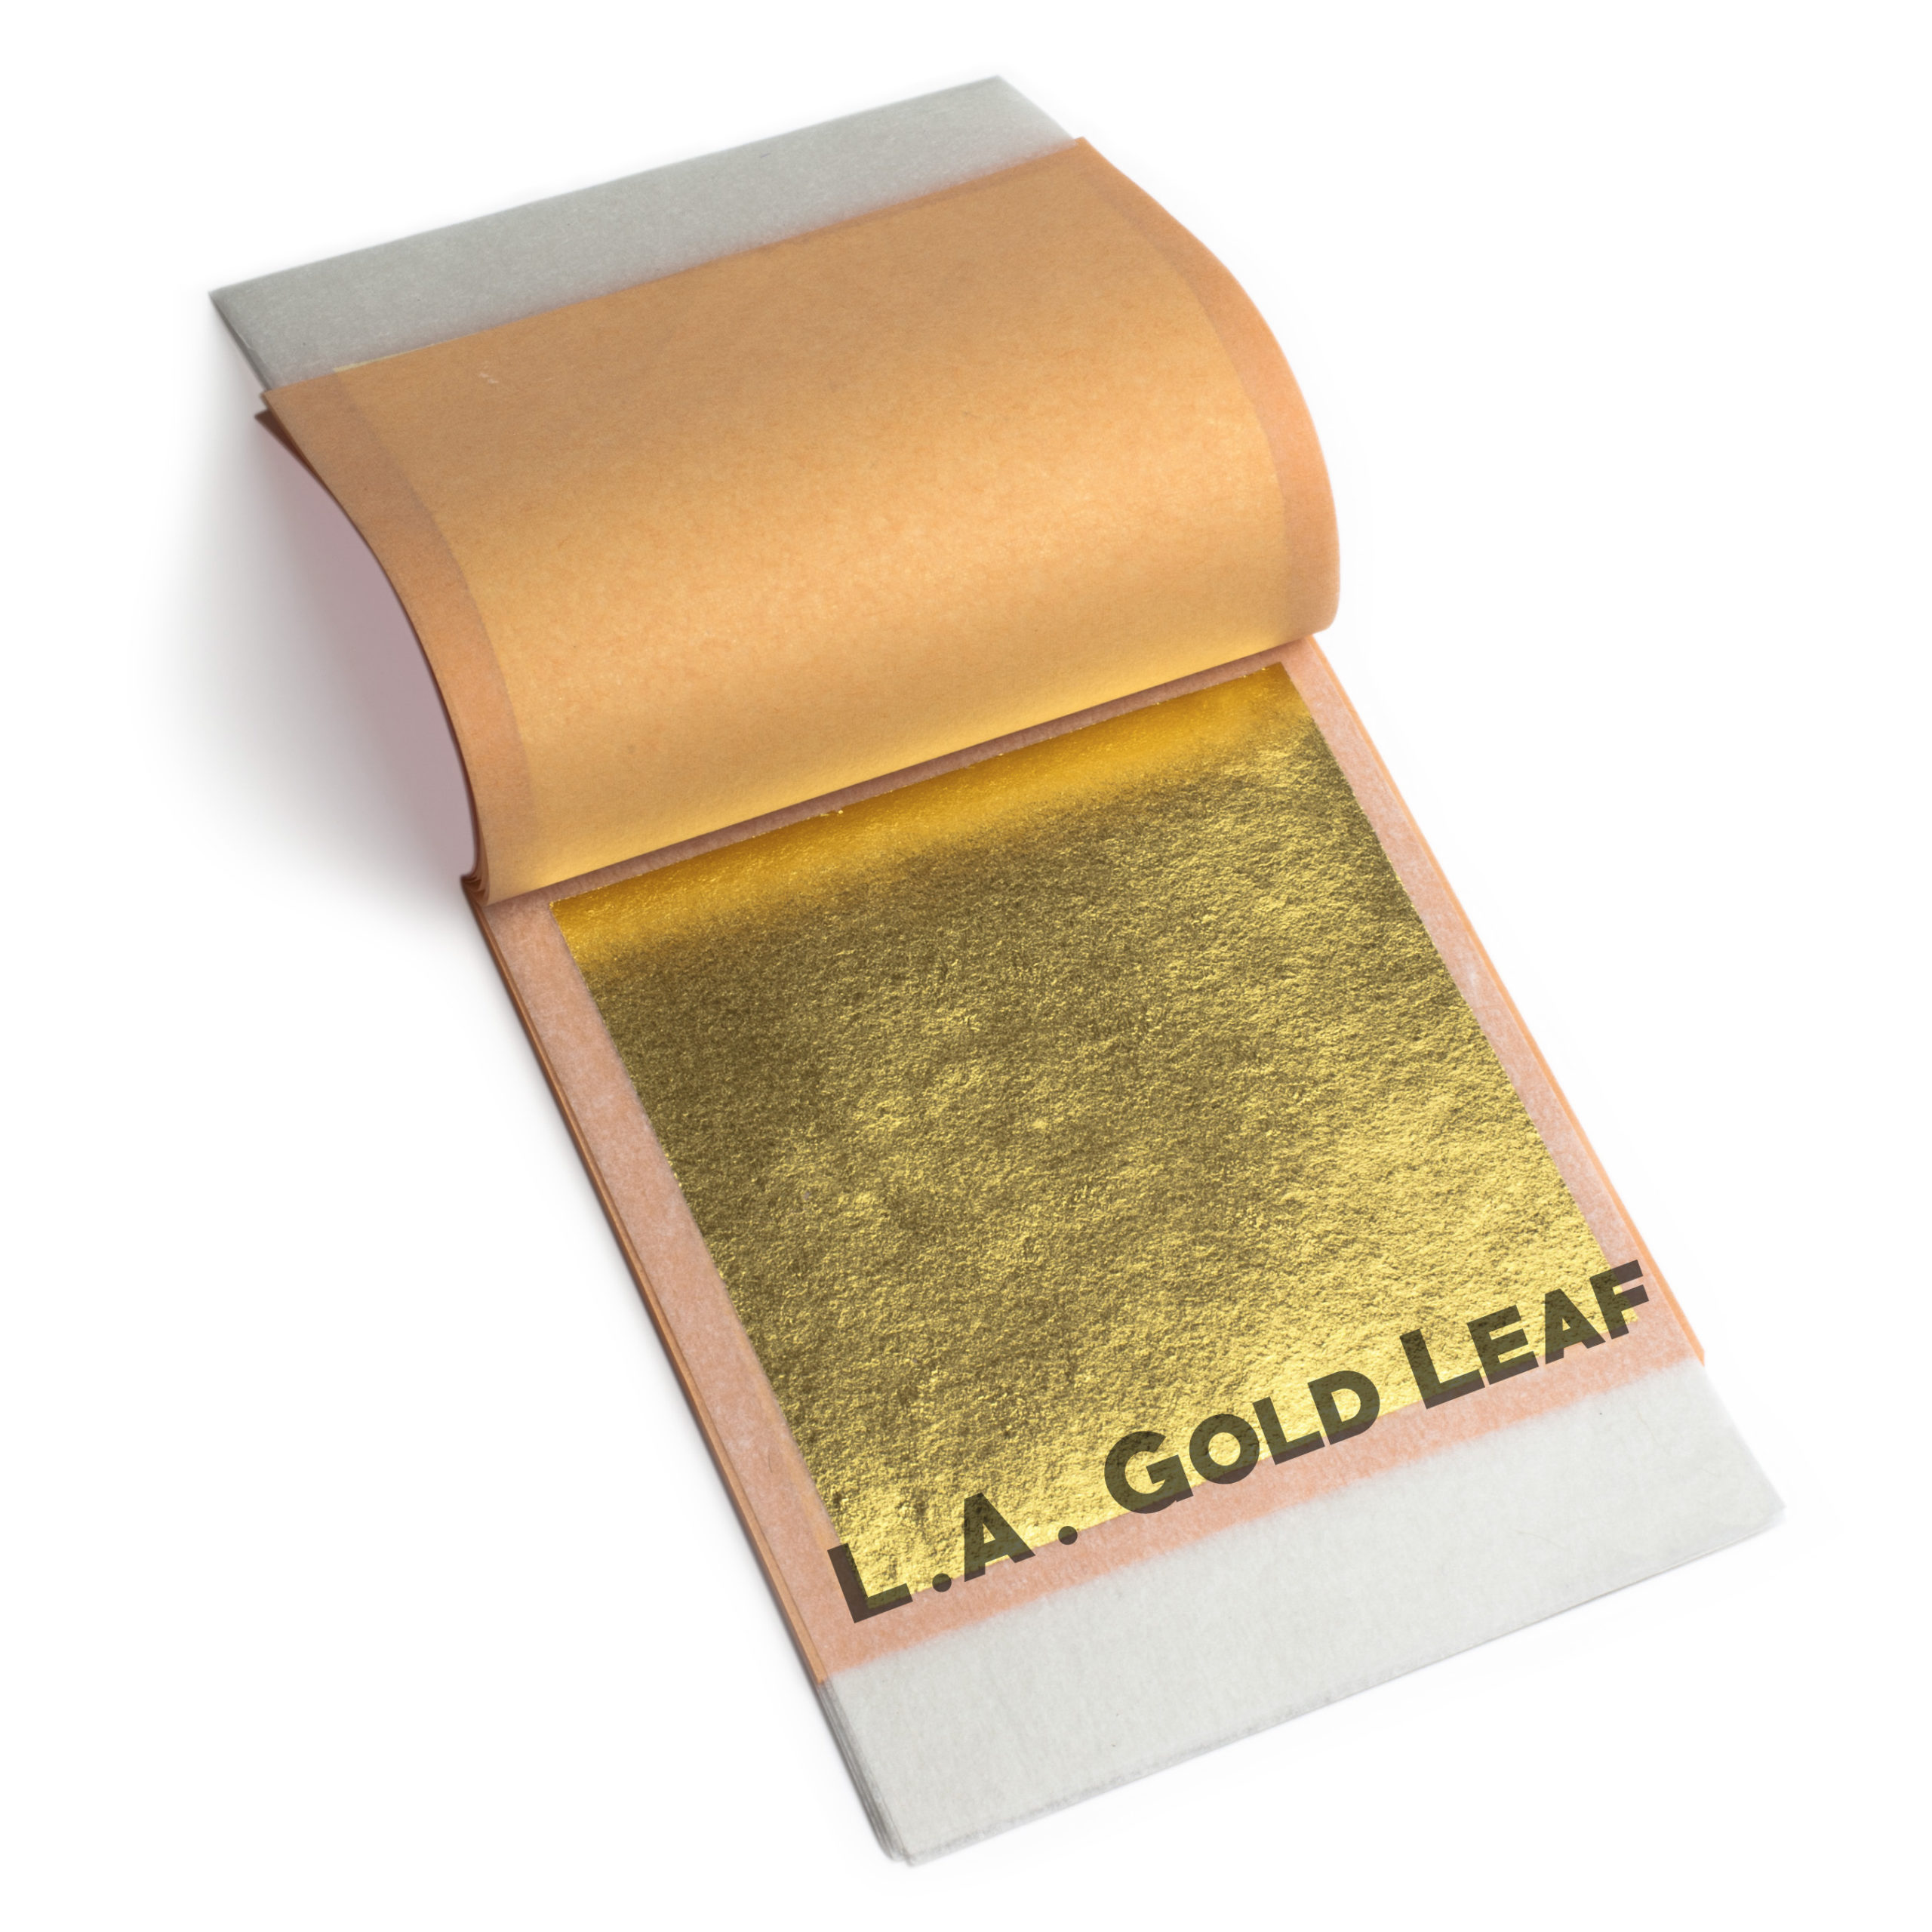 100 sheets  wholesale lot @ ON SALE @   24ct Gold Leaf sheets   @ON SALE@ 